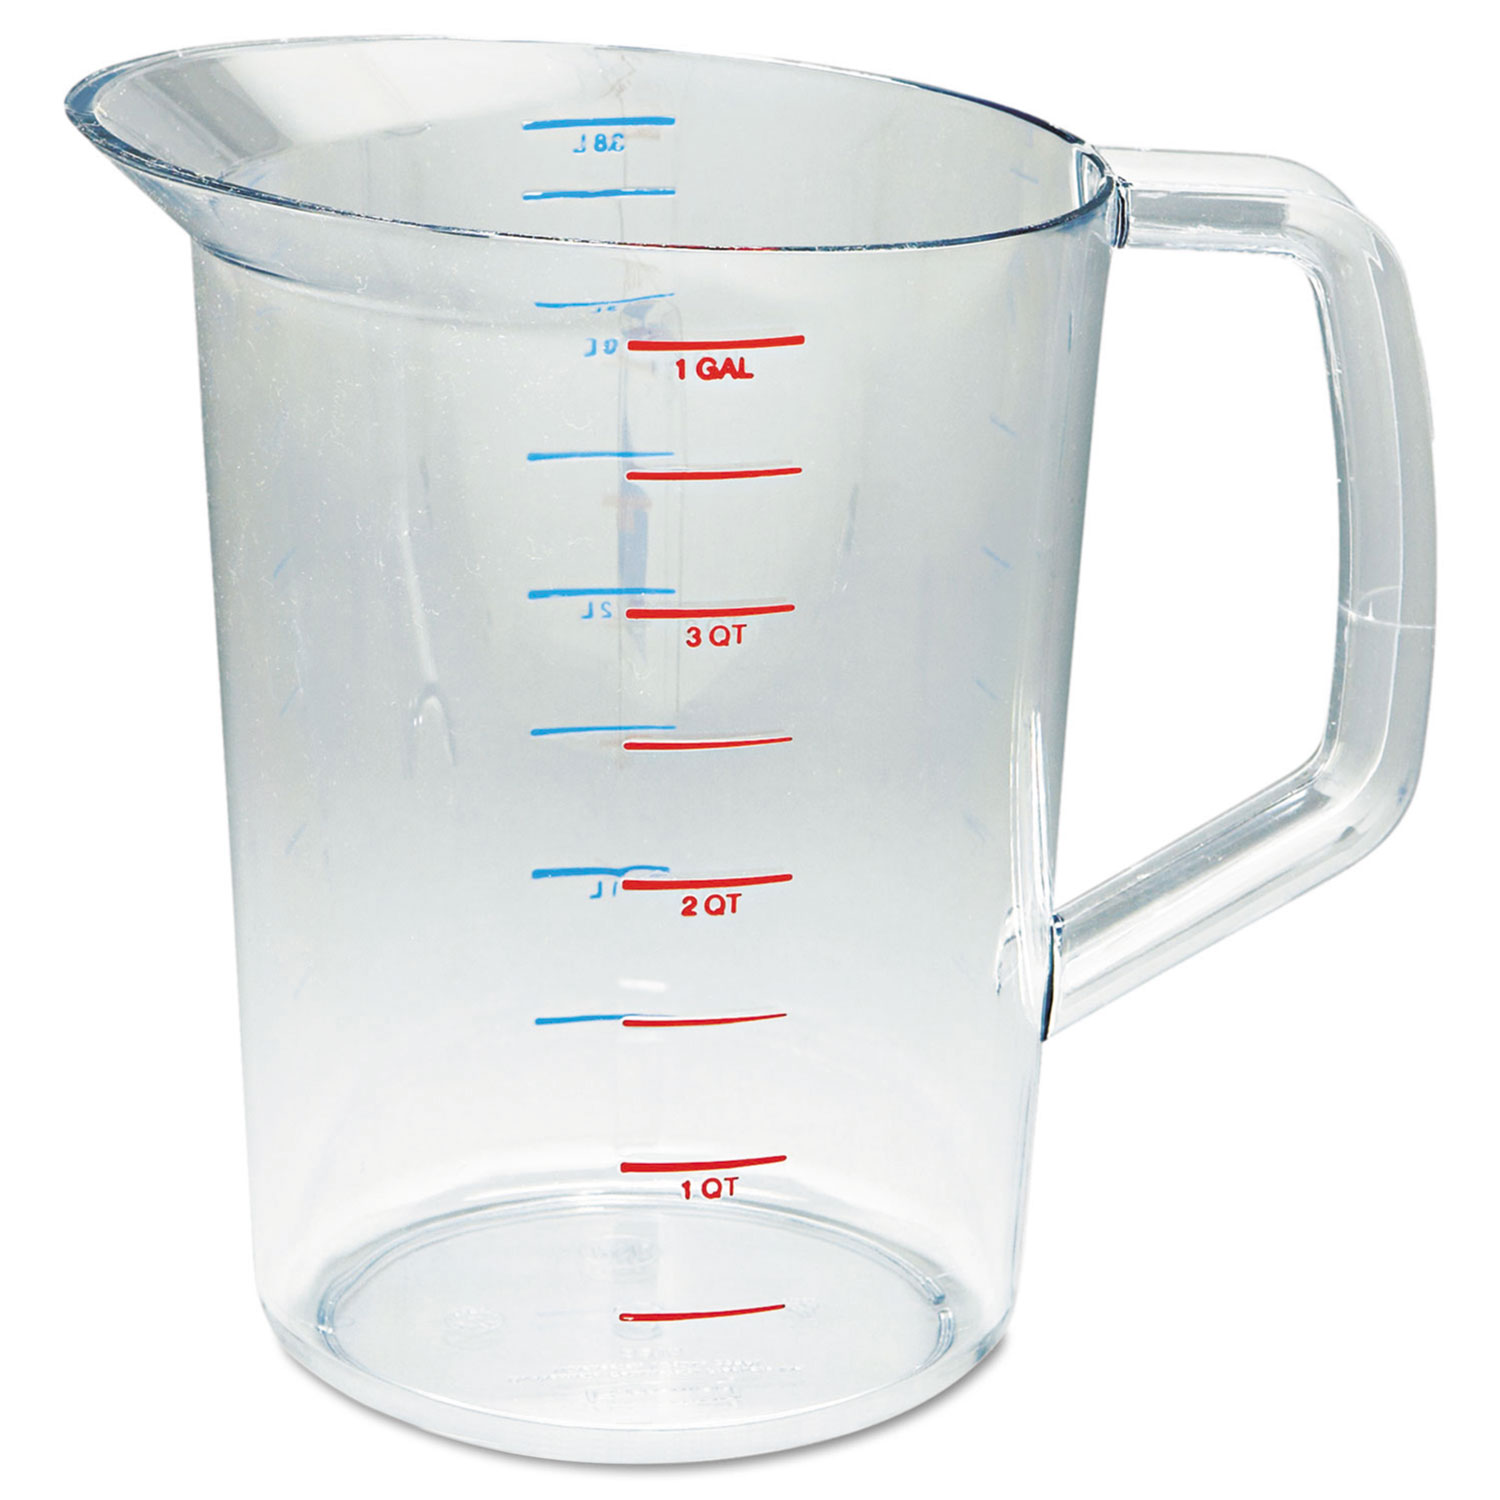 Good Cook Measuring Cup Plastic 2 Cup - Each - Jewel-Osco